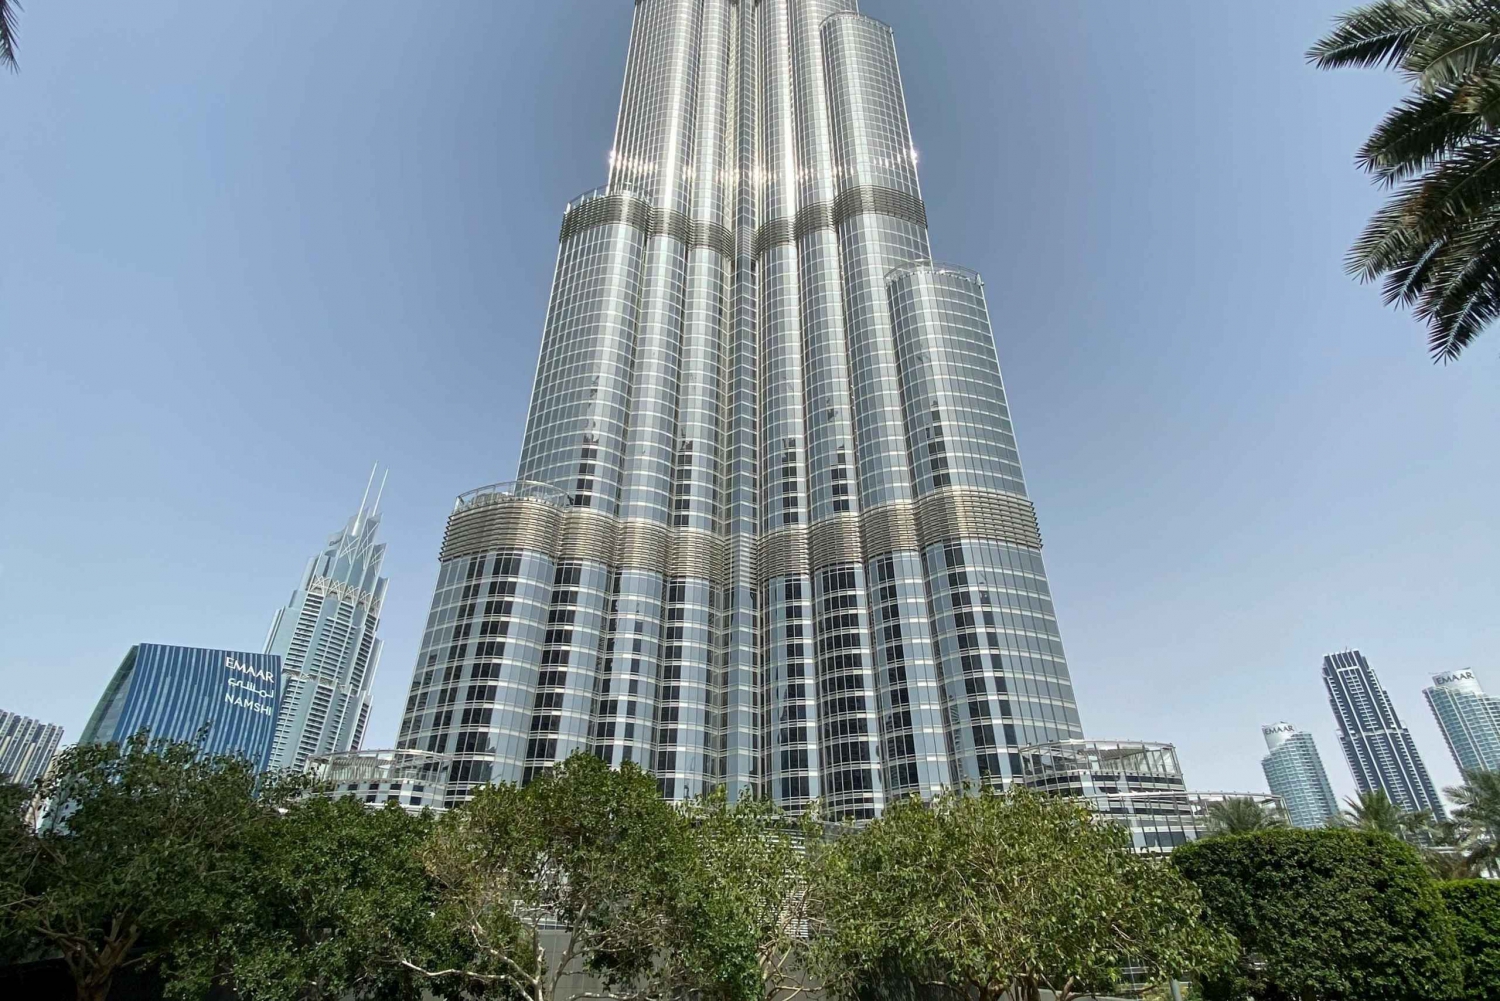 Excursión al atardecer en Dubai con entrada al Burj Khalifa - Día completo